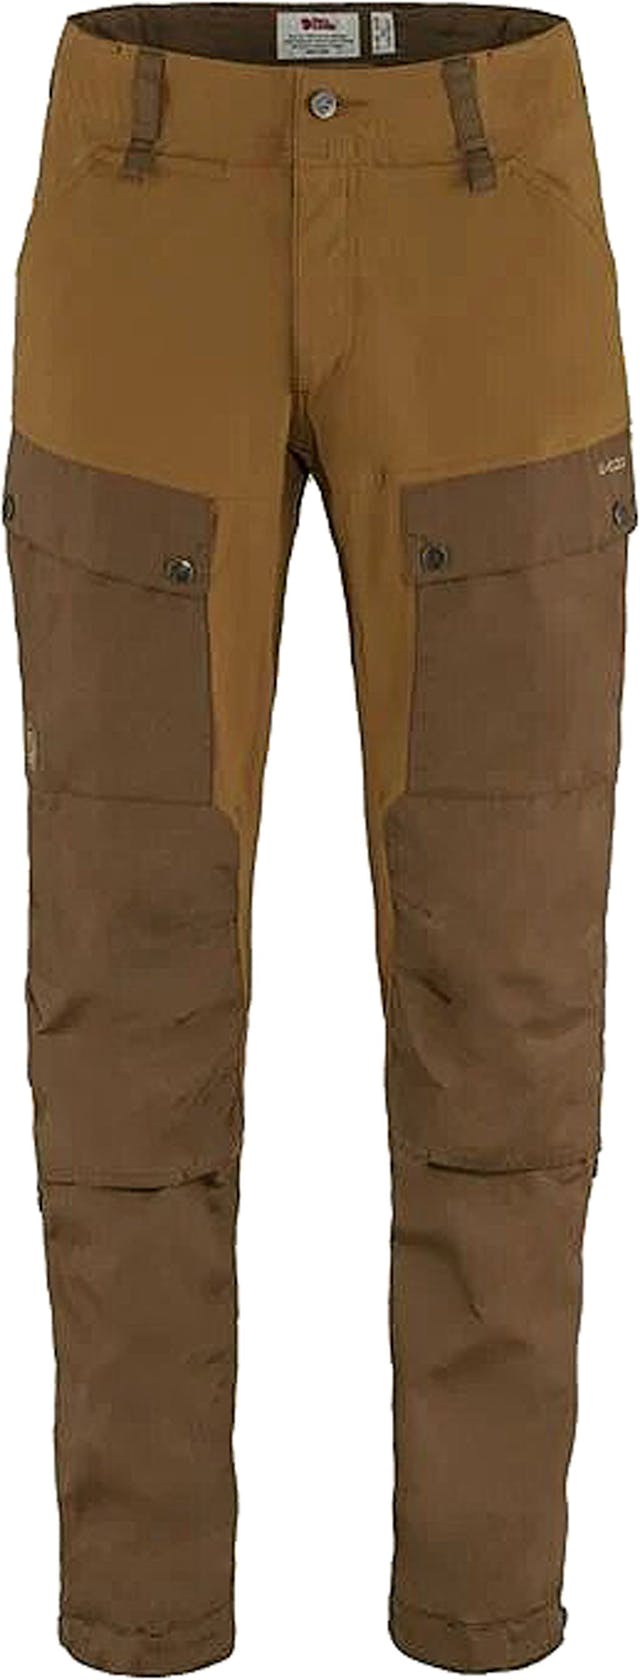 Product image for Keb Trousers - Regular - Men's